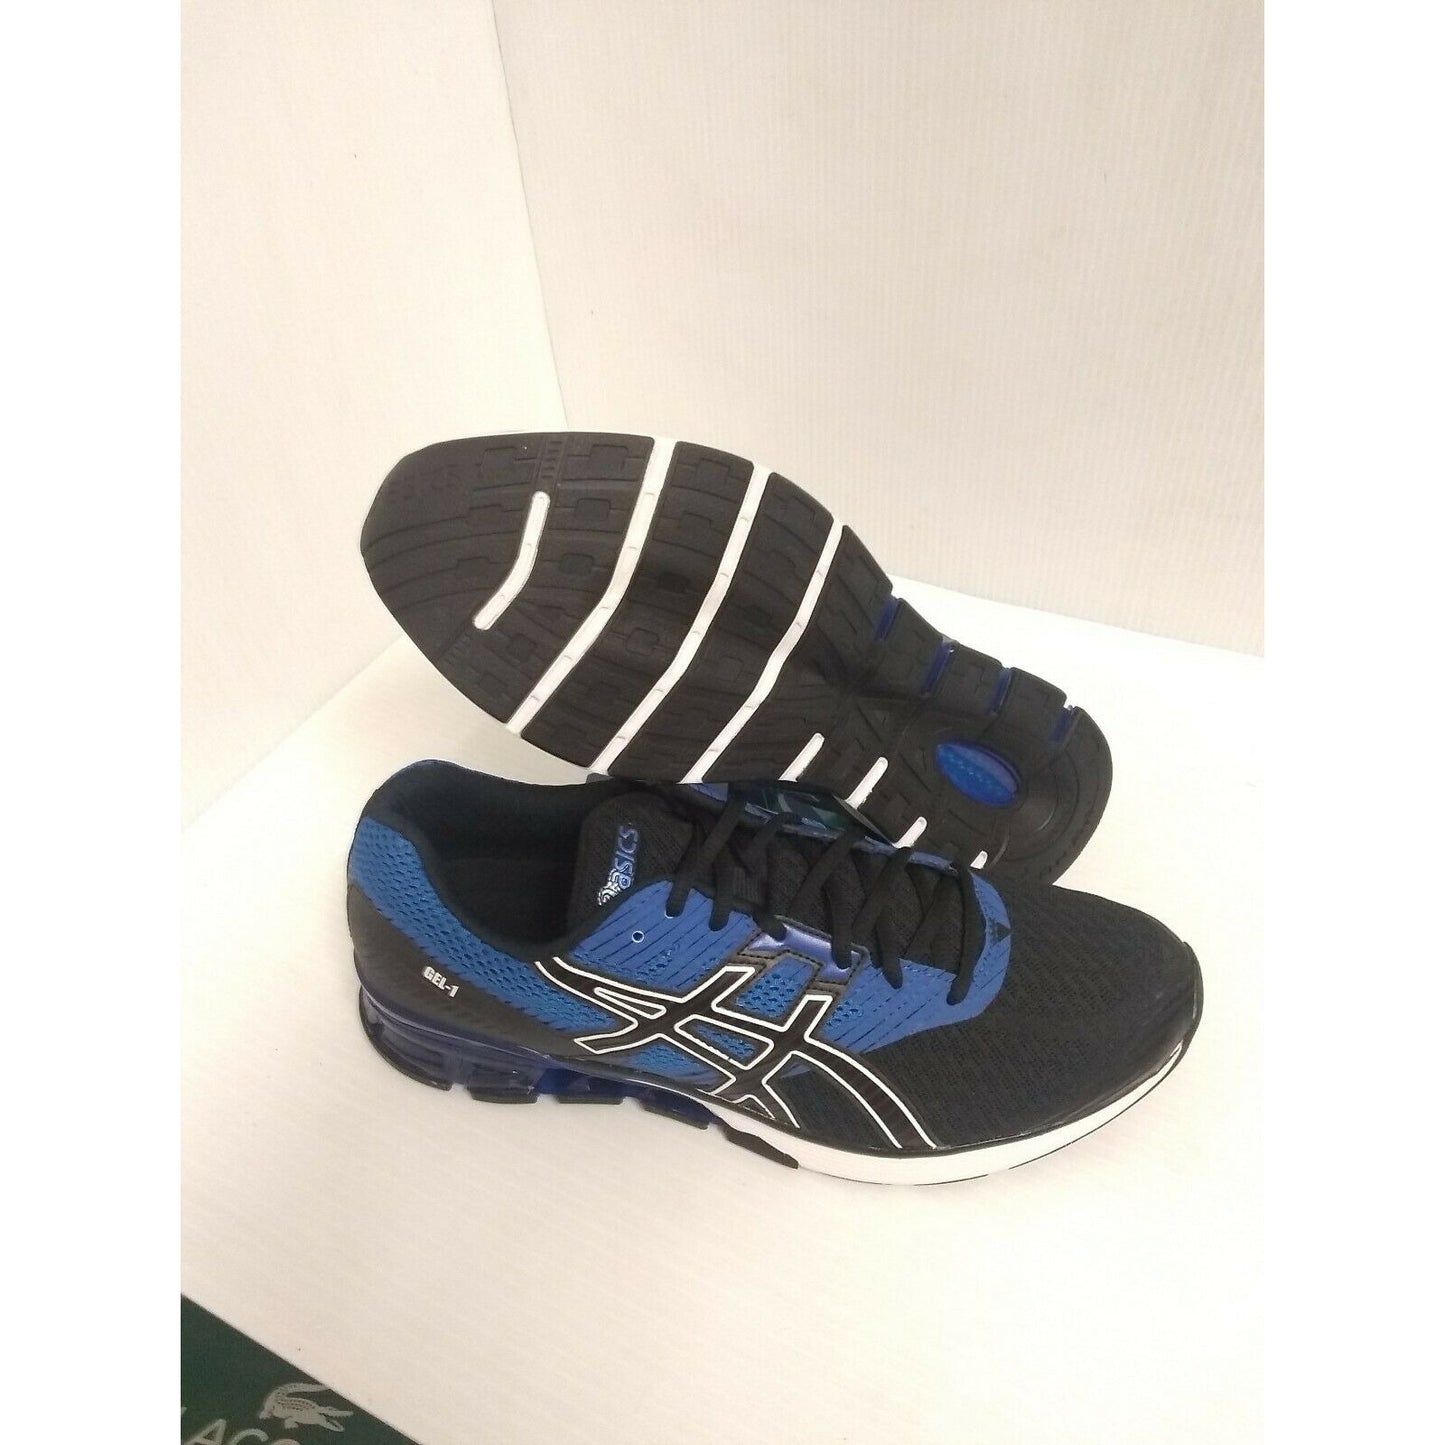 Asics Men's Shoes Gel 1 Black Blue running shoes Size 11.5 us